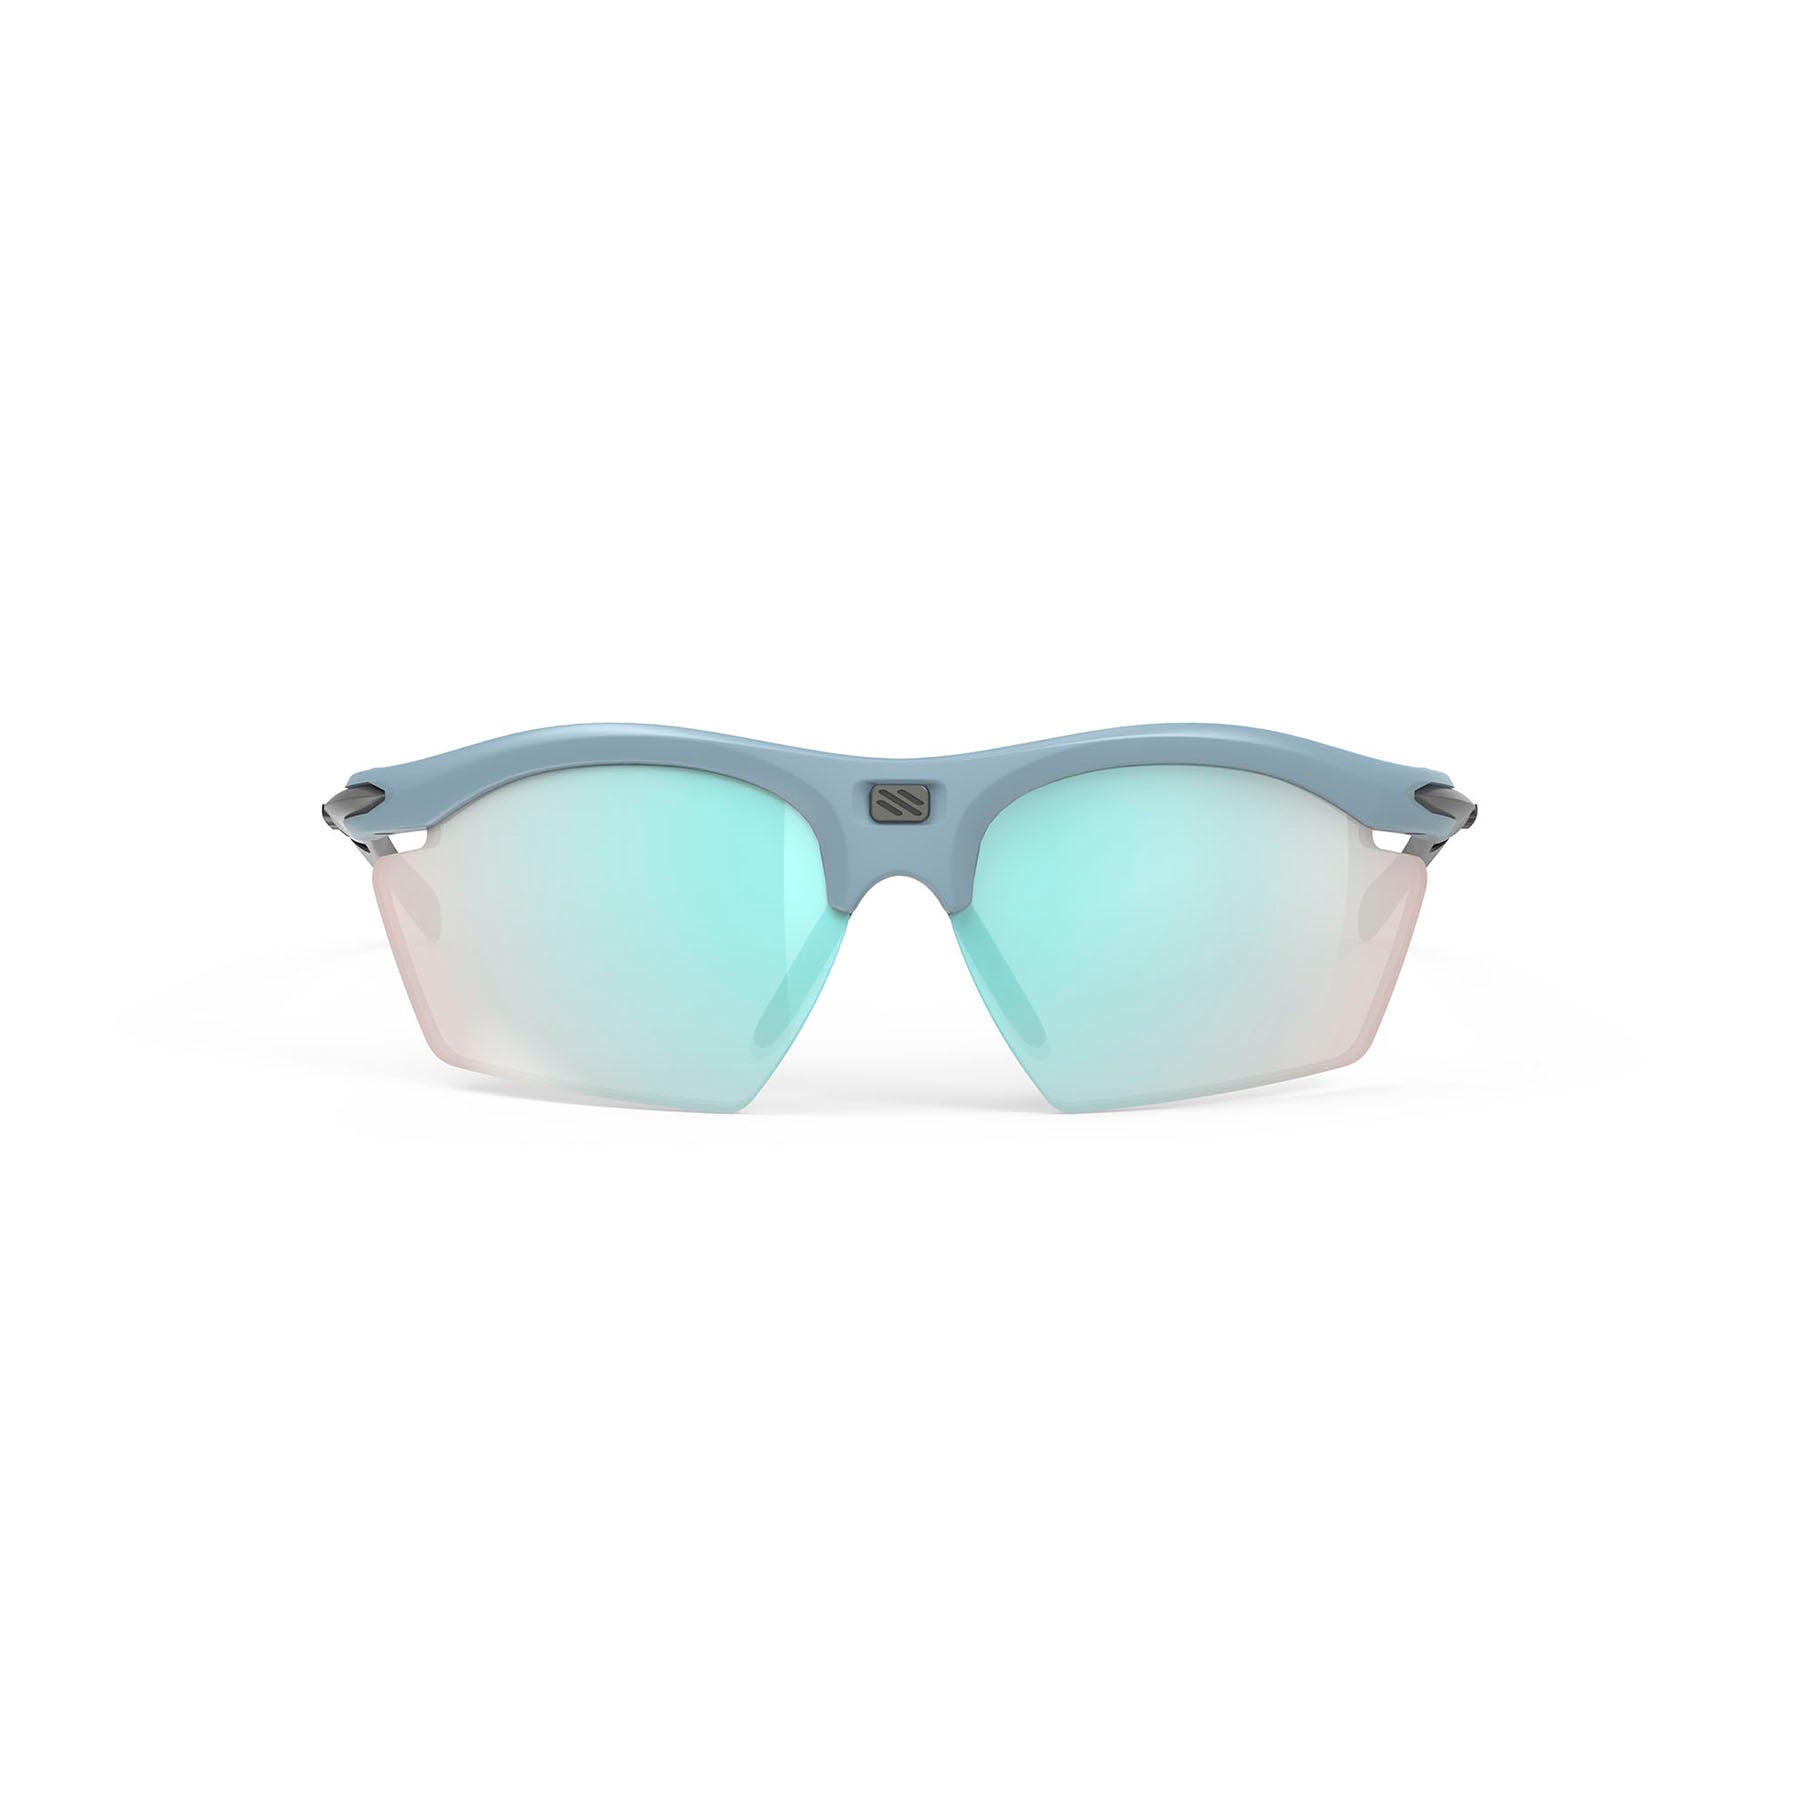 Rudy Project prescription ready womens sport sunglasses#color_rydon-slim-glacier-matte-frame-with-multilaser-osmium-lenses